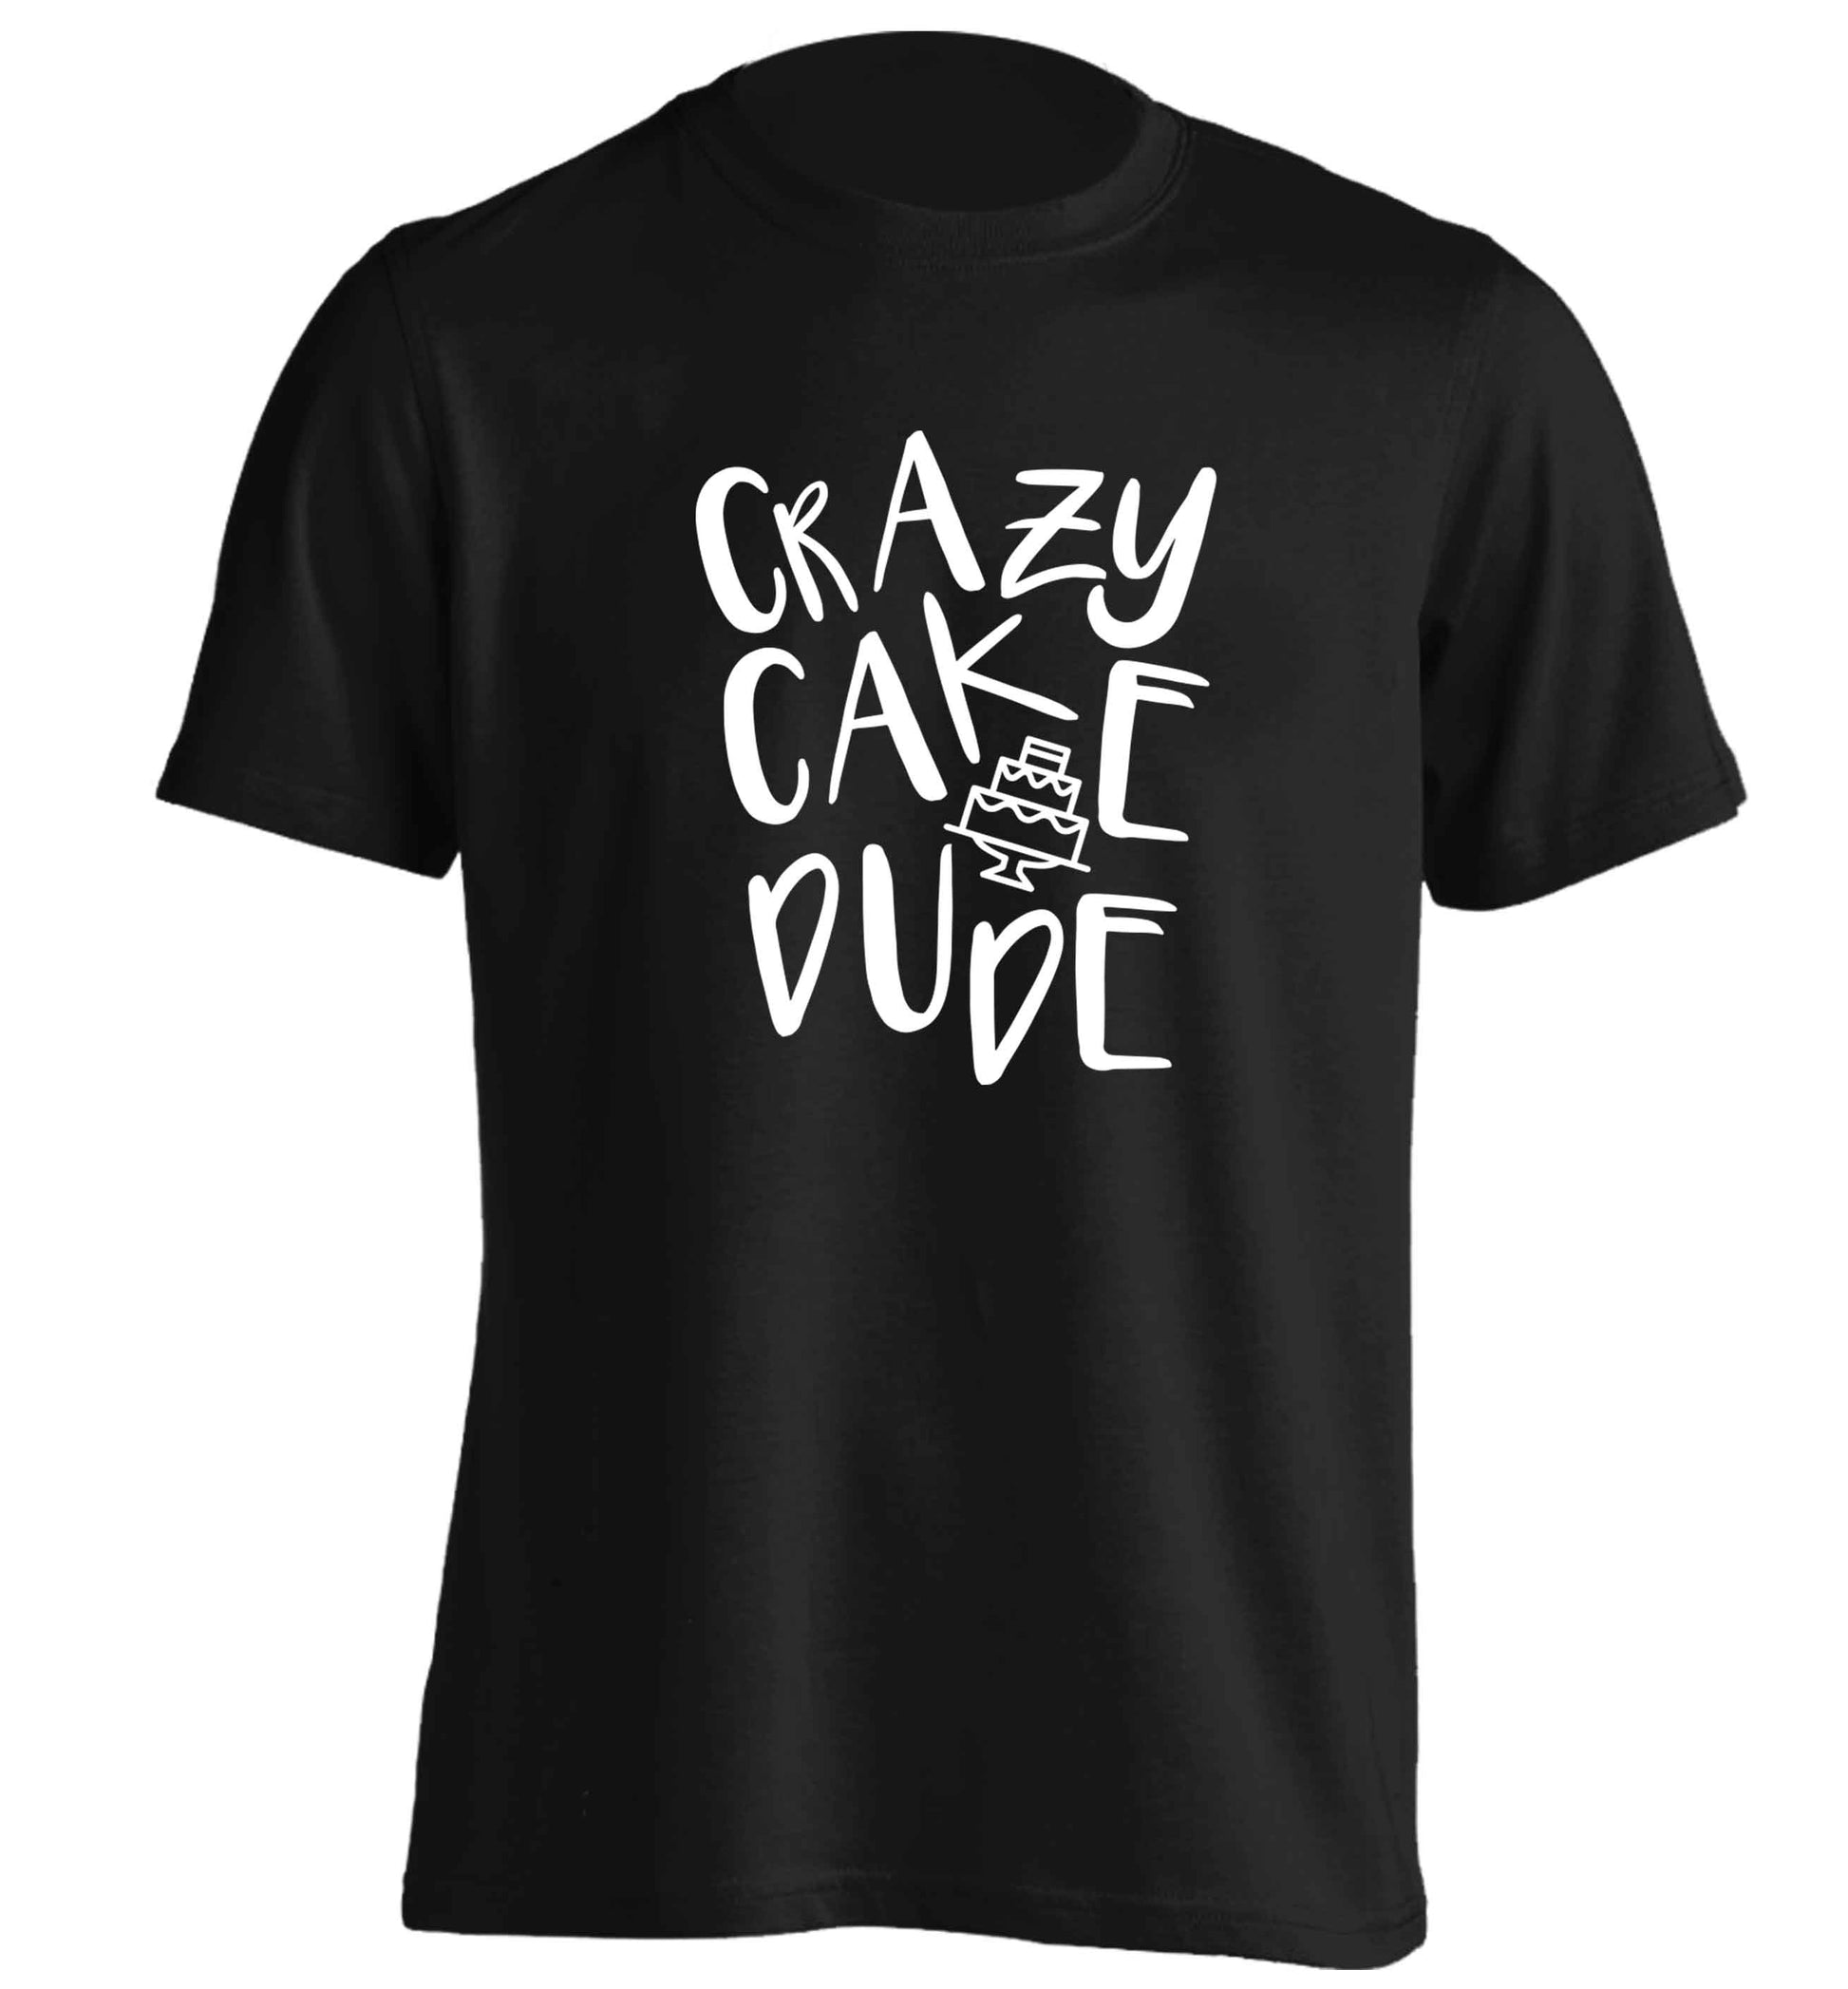 Crazy cake dude adults unisex black Tshirt 2XL